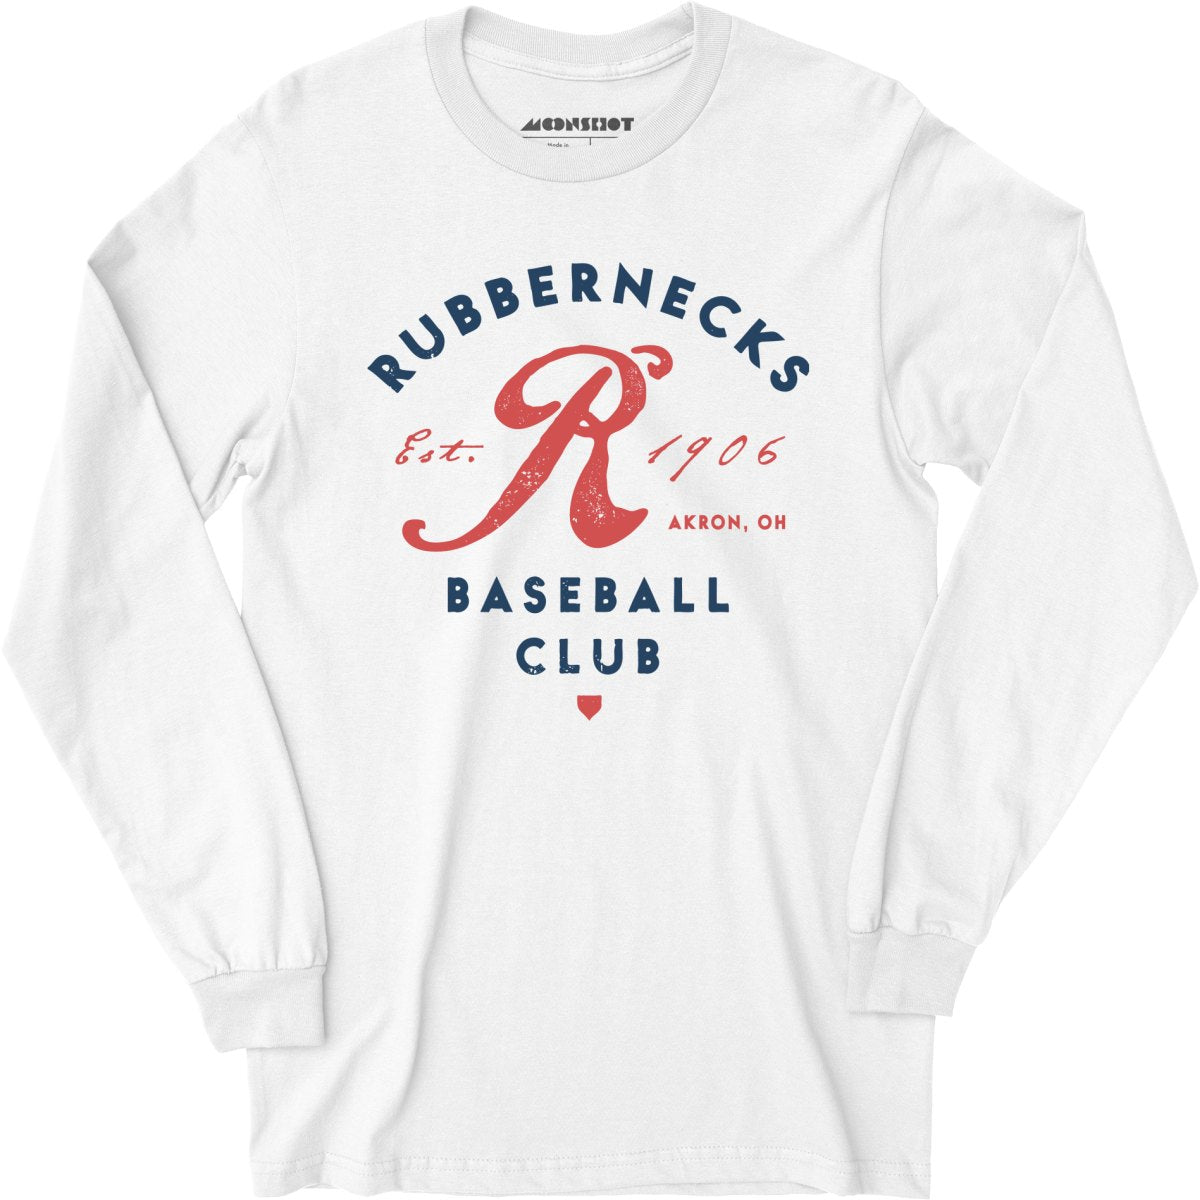 White Label Mfg Akron Rubbernecks - Ohio - Vintage Defunct Baseball Teams - Long Sleeve T-Shirt Natural / 3XL